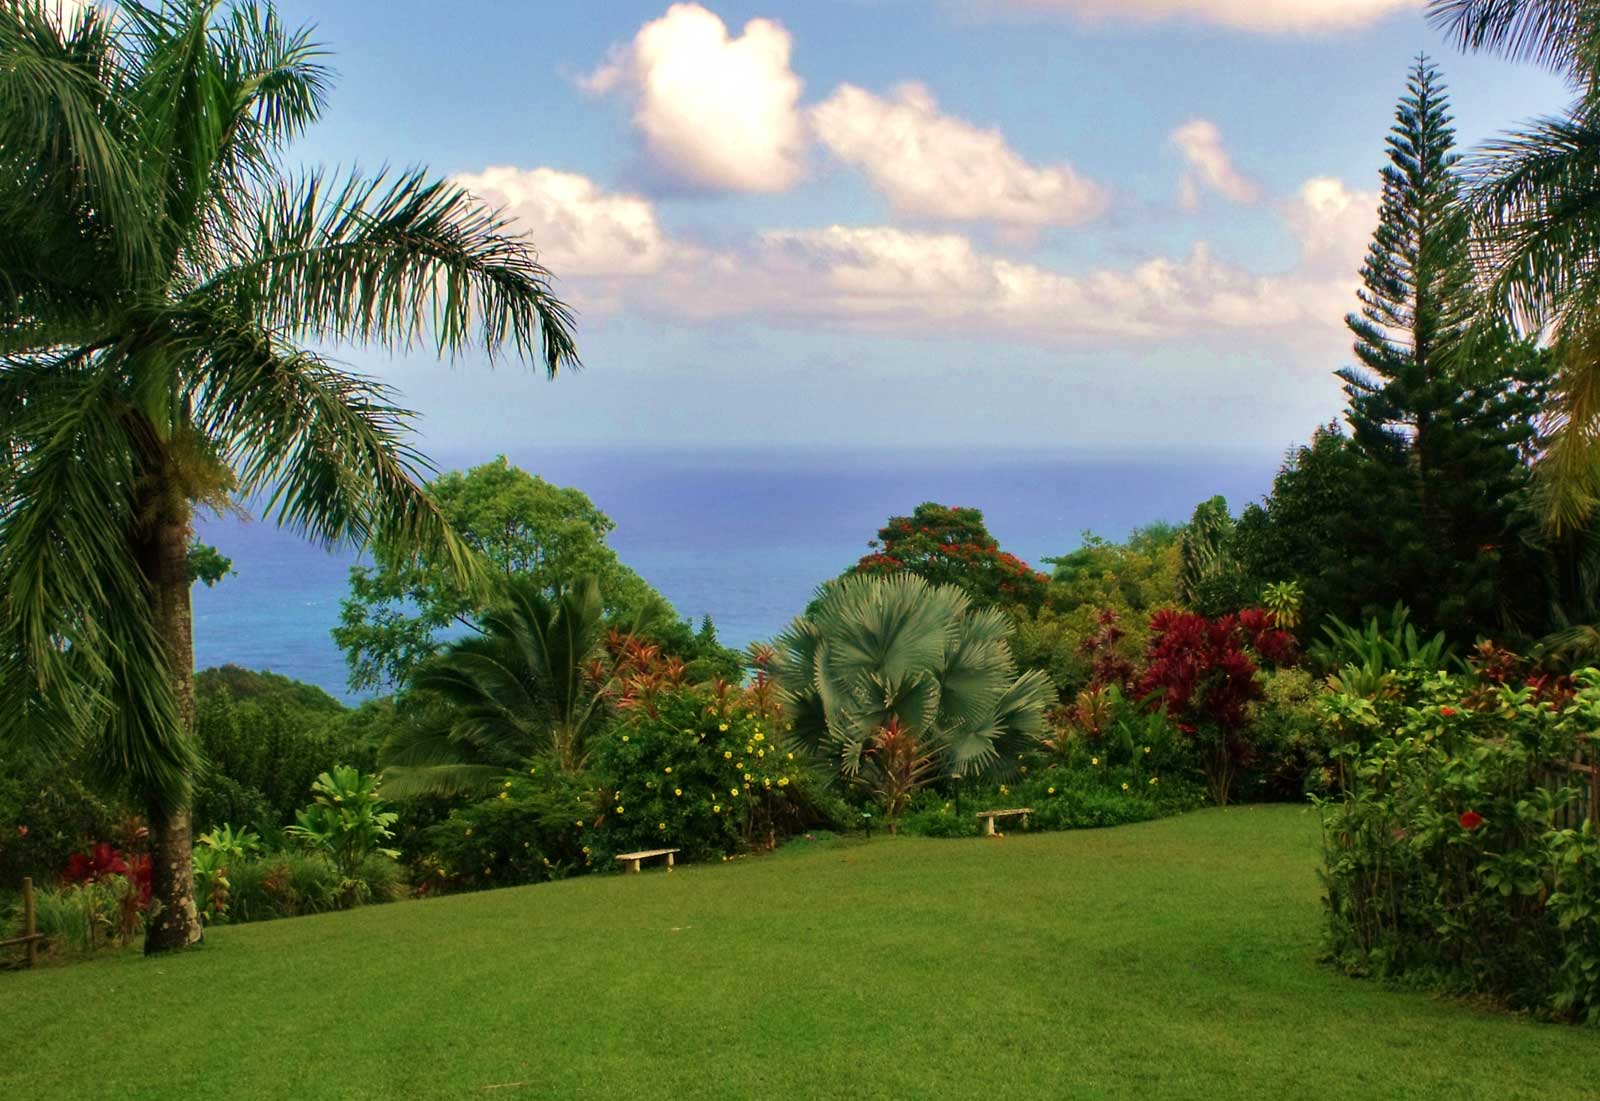 Garden Of Eden Maui Hawaii Pictures